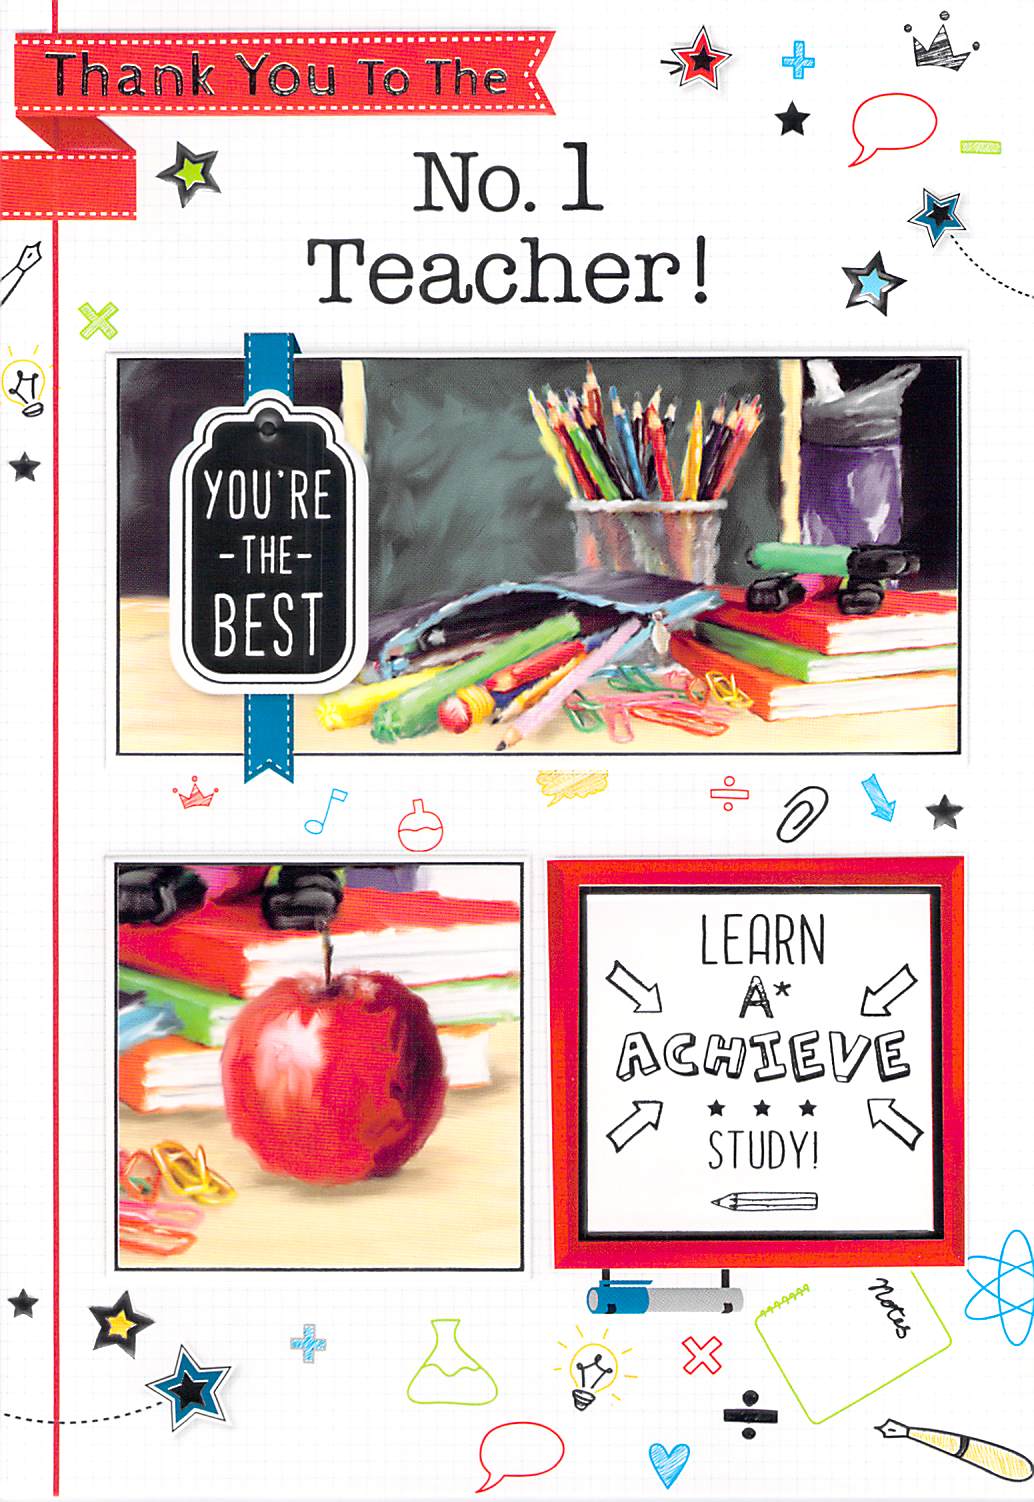 Thank You To #1 Teacher - Greeting Card - Free Postage